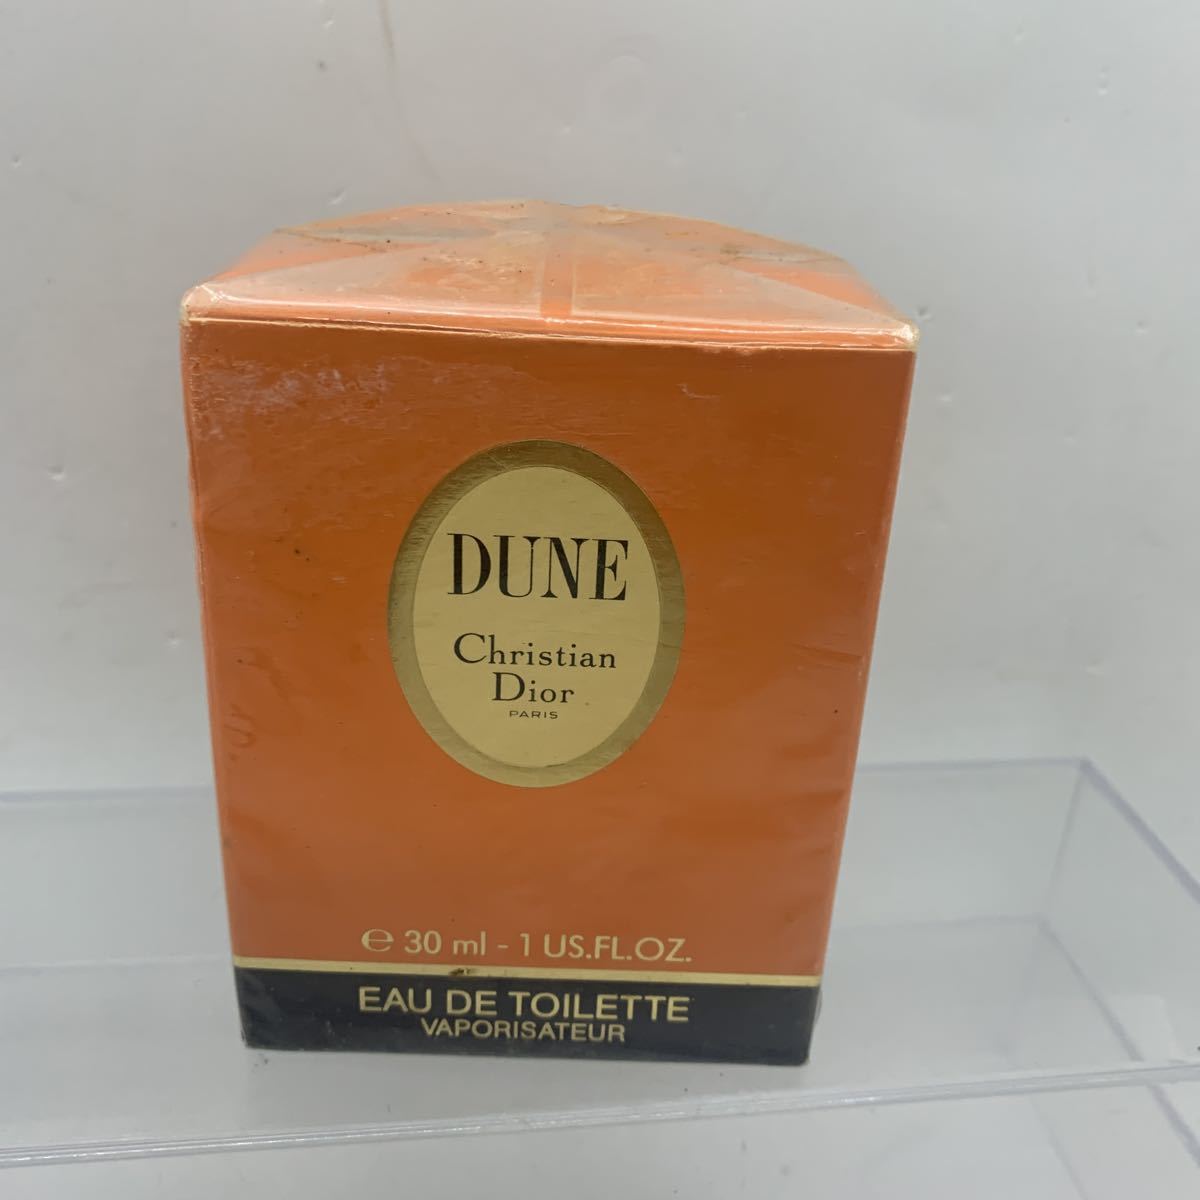  perfume new goods unused unopened Christian Dior Christian Dior DUNEte.-n30ml 23050124